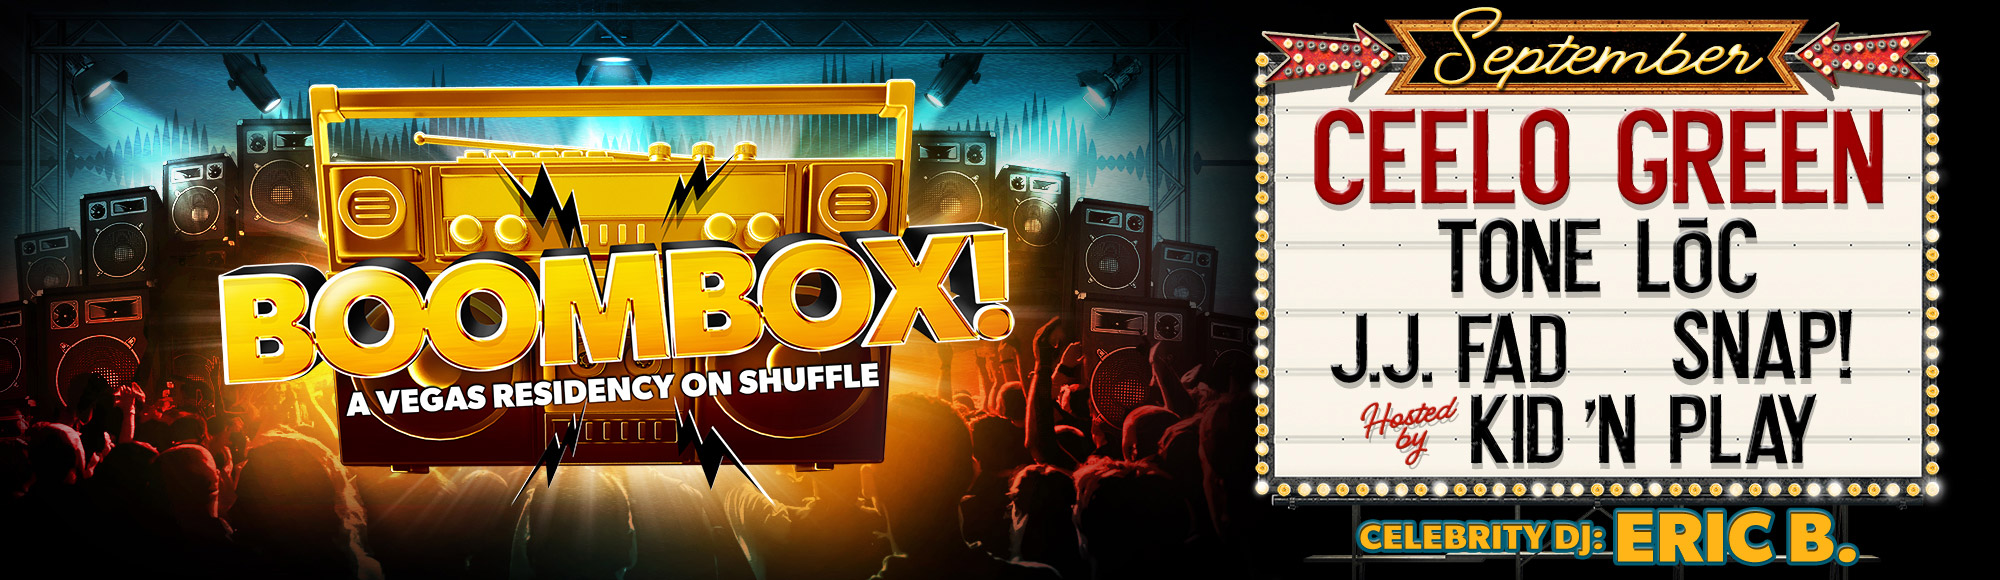 BOOMBOX! A Vegas Residency On Shuffle show